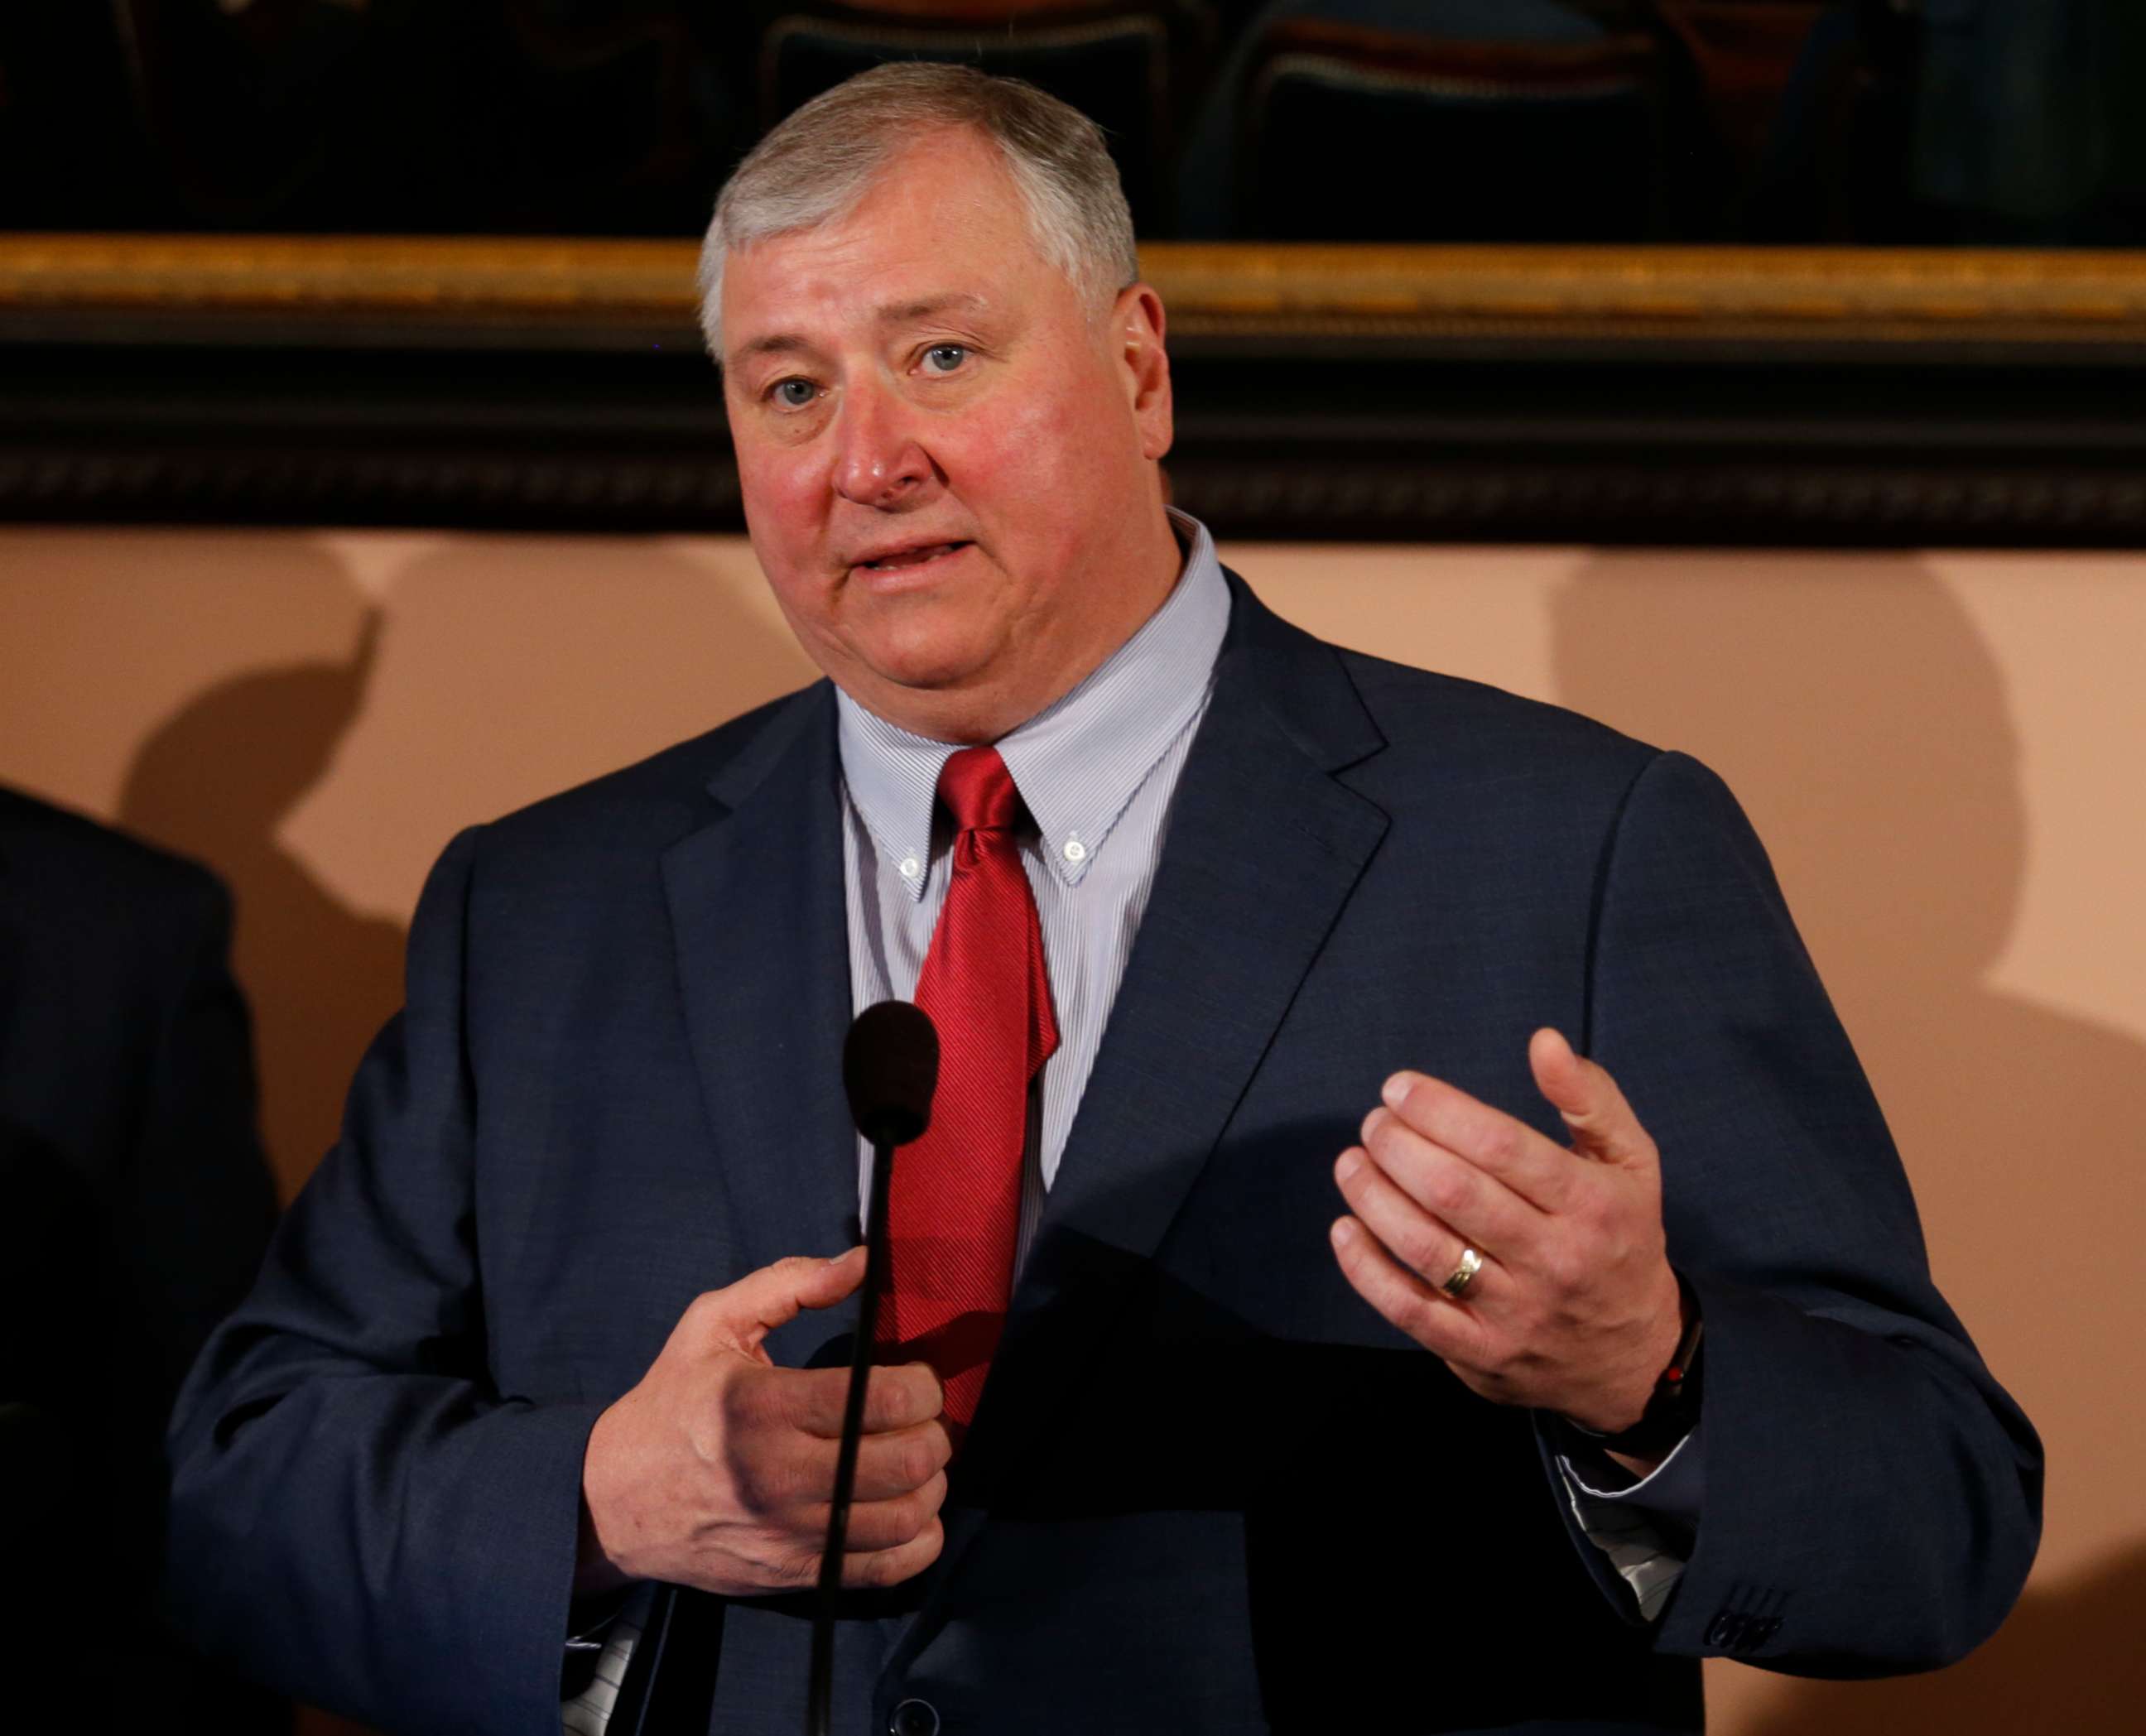 PHOTO: This March 5, 2019 file photo shows Ohio House speaker Larry Householder speaking in Columbus, Ohio.